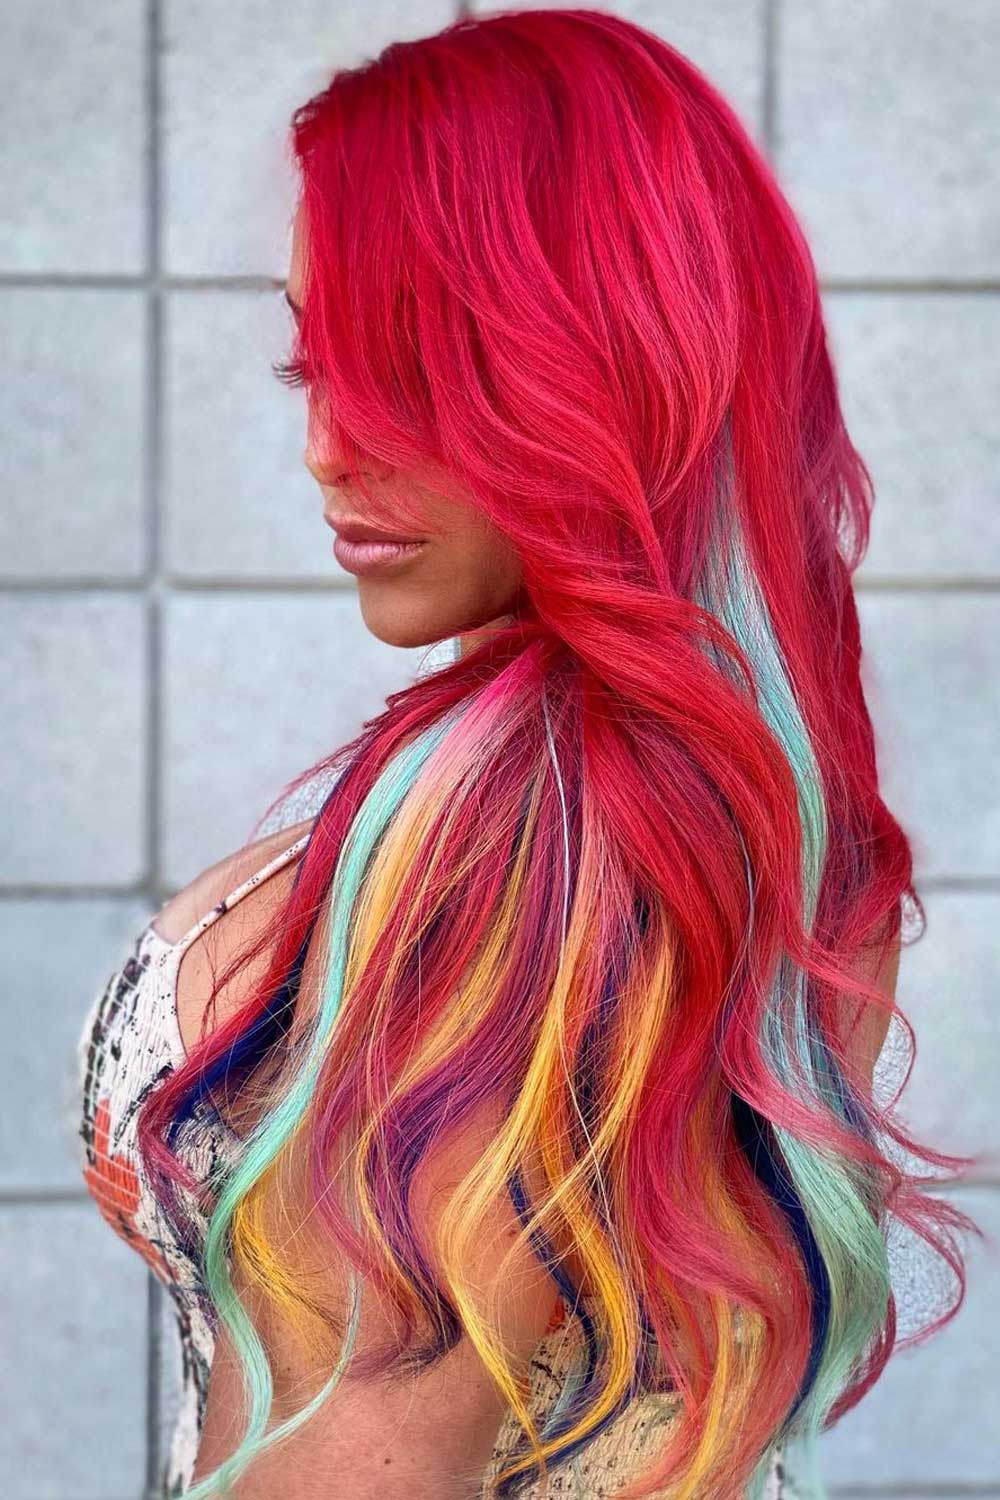 Bright Peekaboo Highlights with Pink Hair